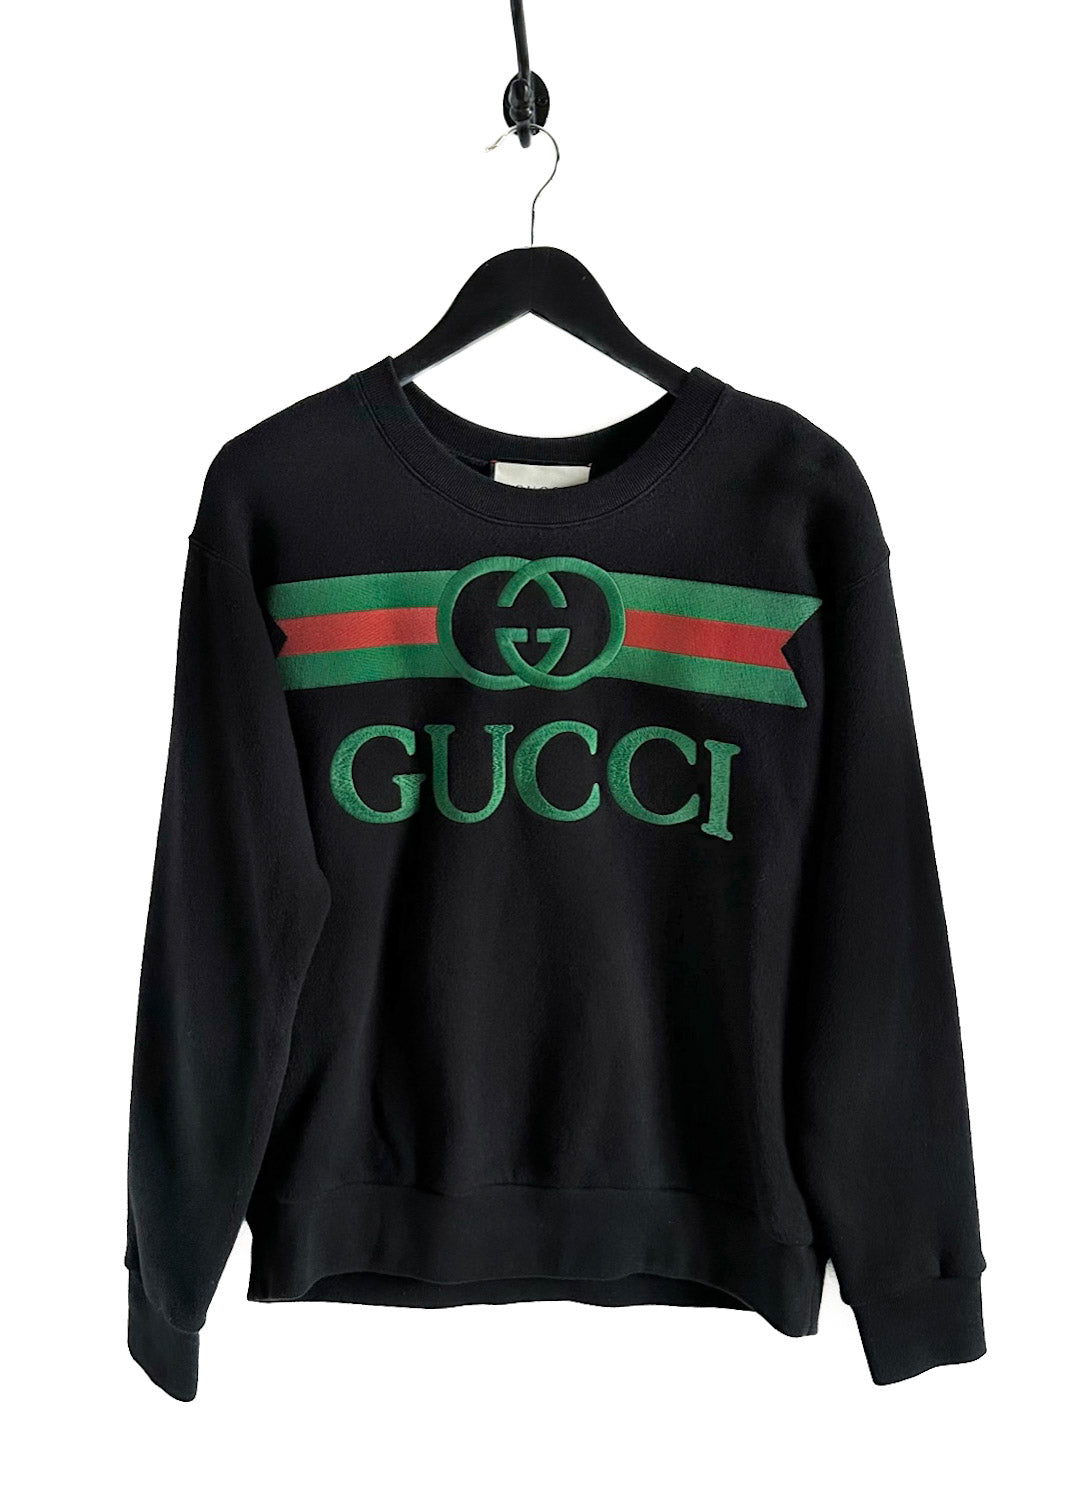 Gucci Black Embroidered Logo Boutique LUC.S